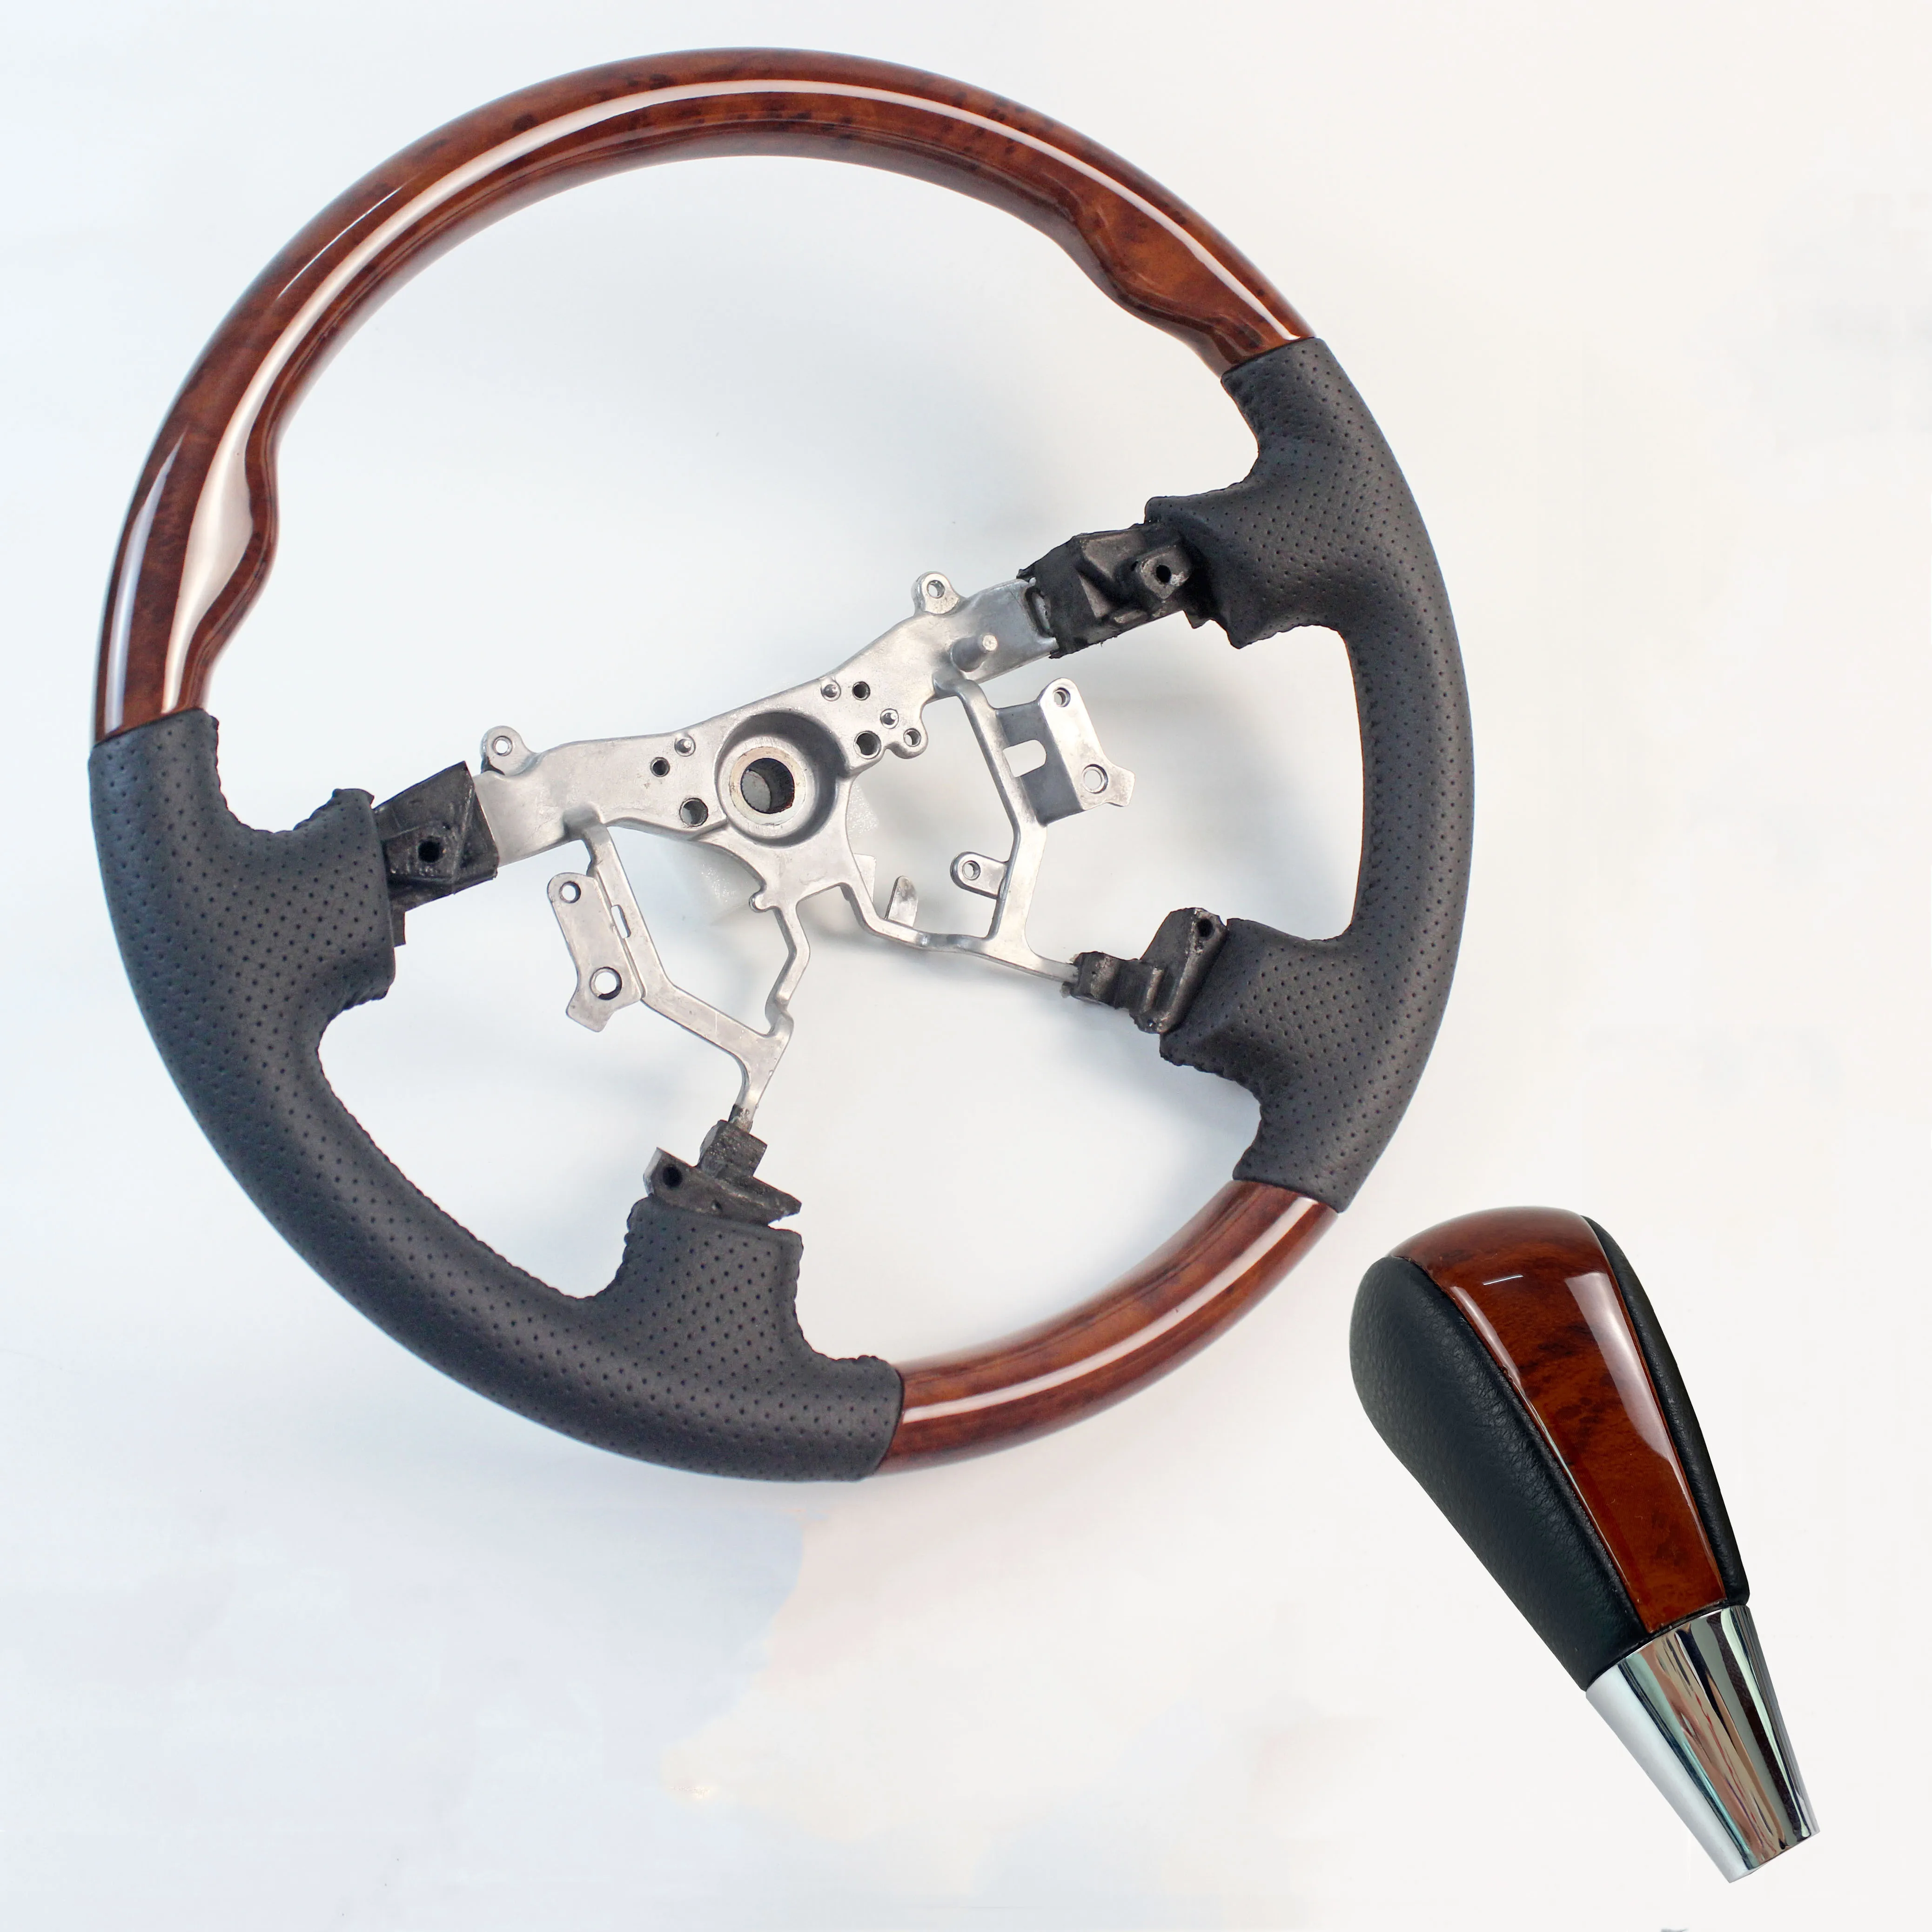 

Land Cruiser 100 Steering Wheel Wooden Shift Knob For Toyota LC100 FJ100 Uzj100 Interior Accessories 1997-2007